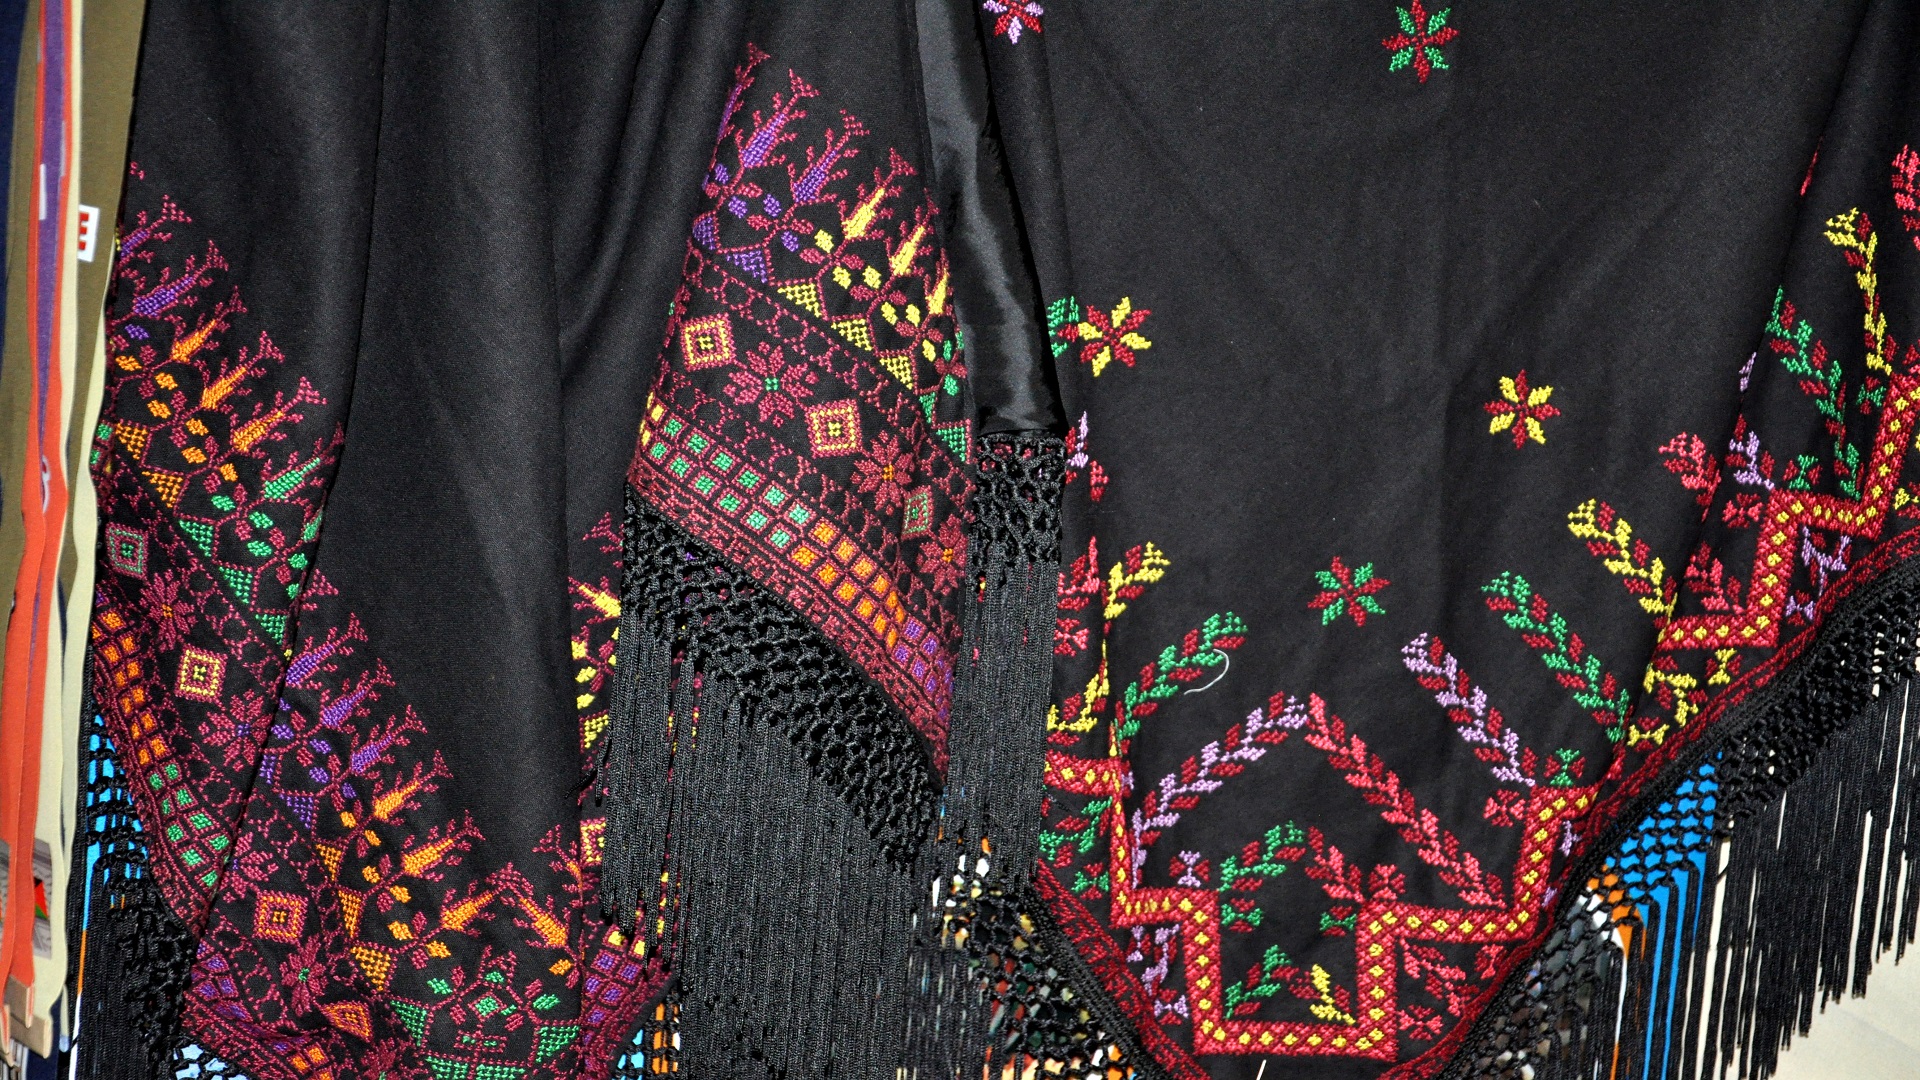 Palestinian dress